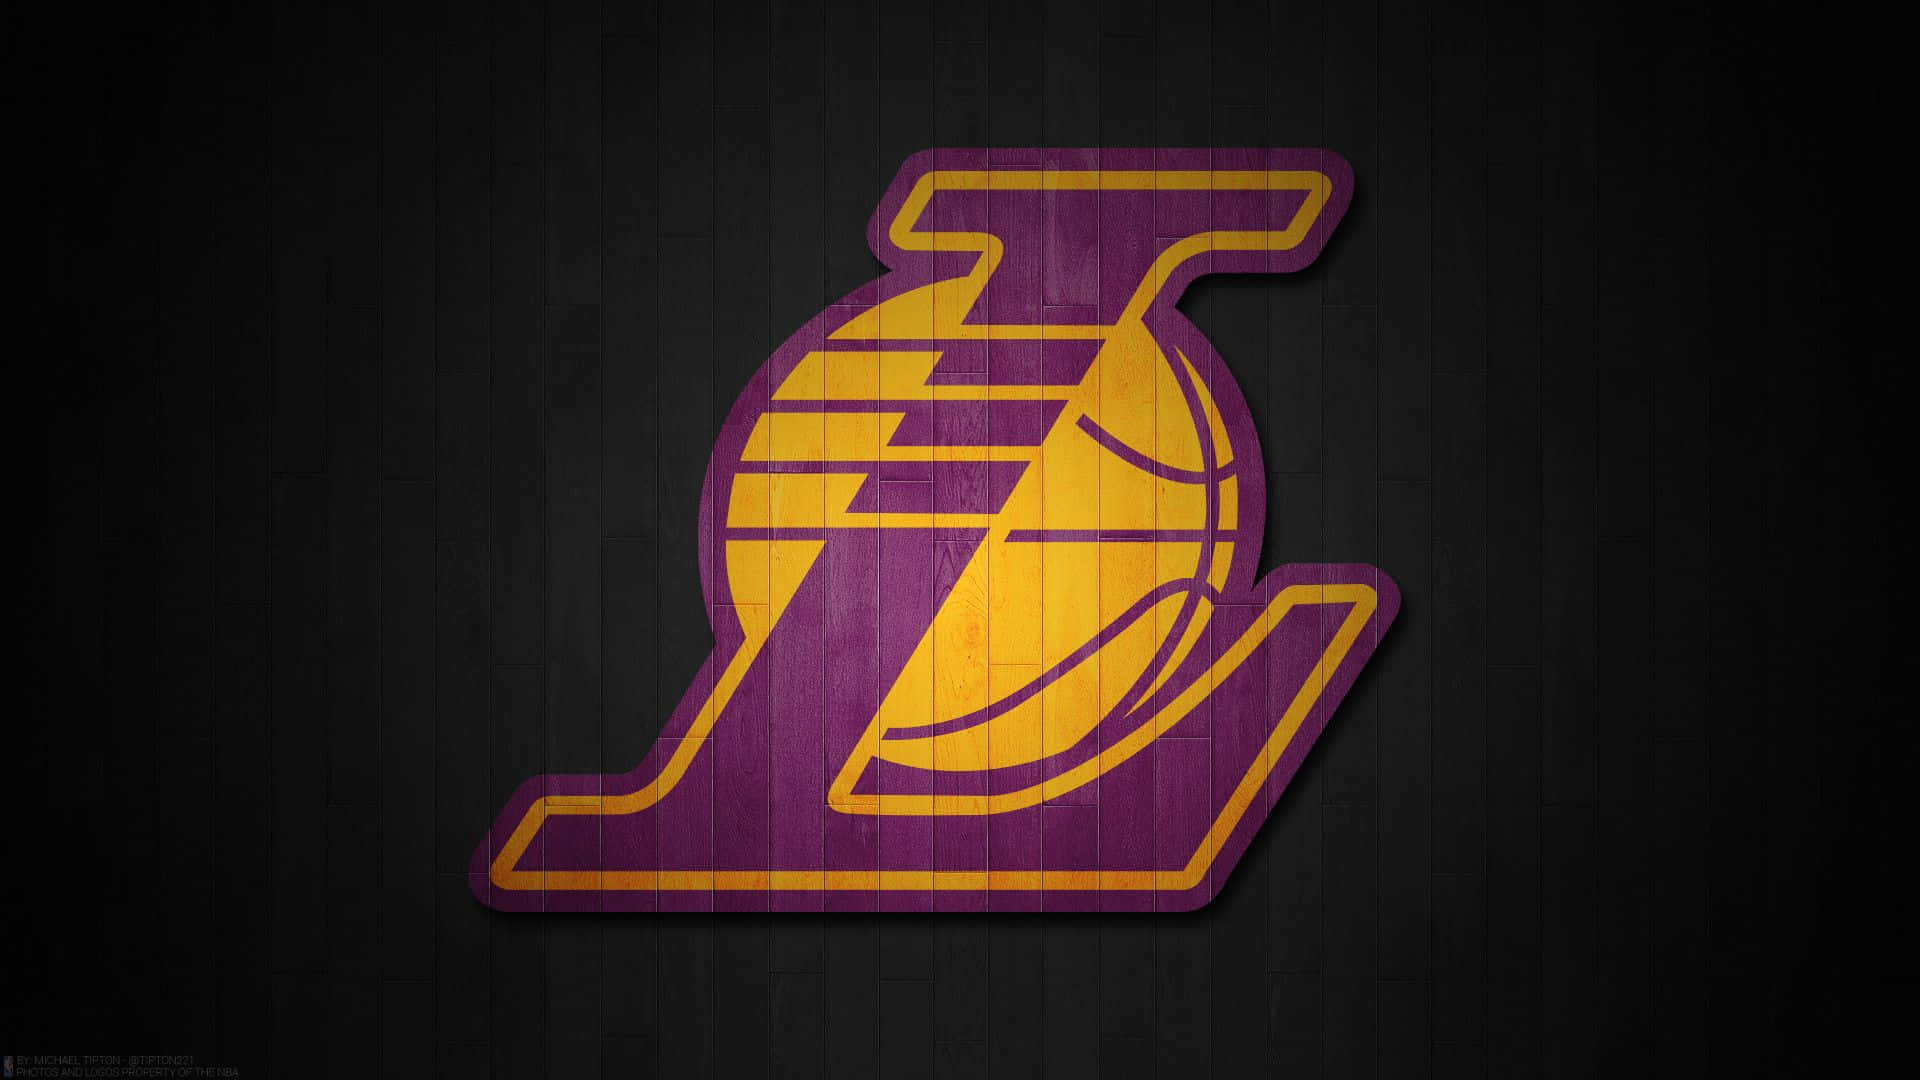 Losangeles Lakers - En Jakt På Ett Evigt Arv